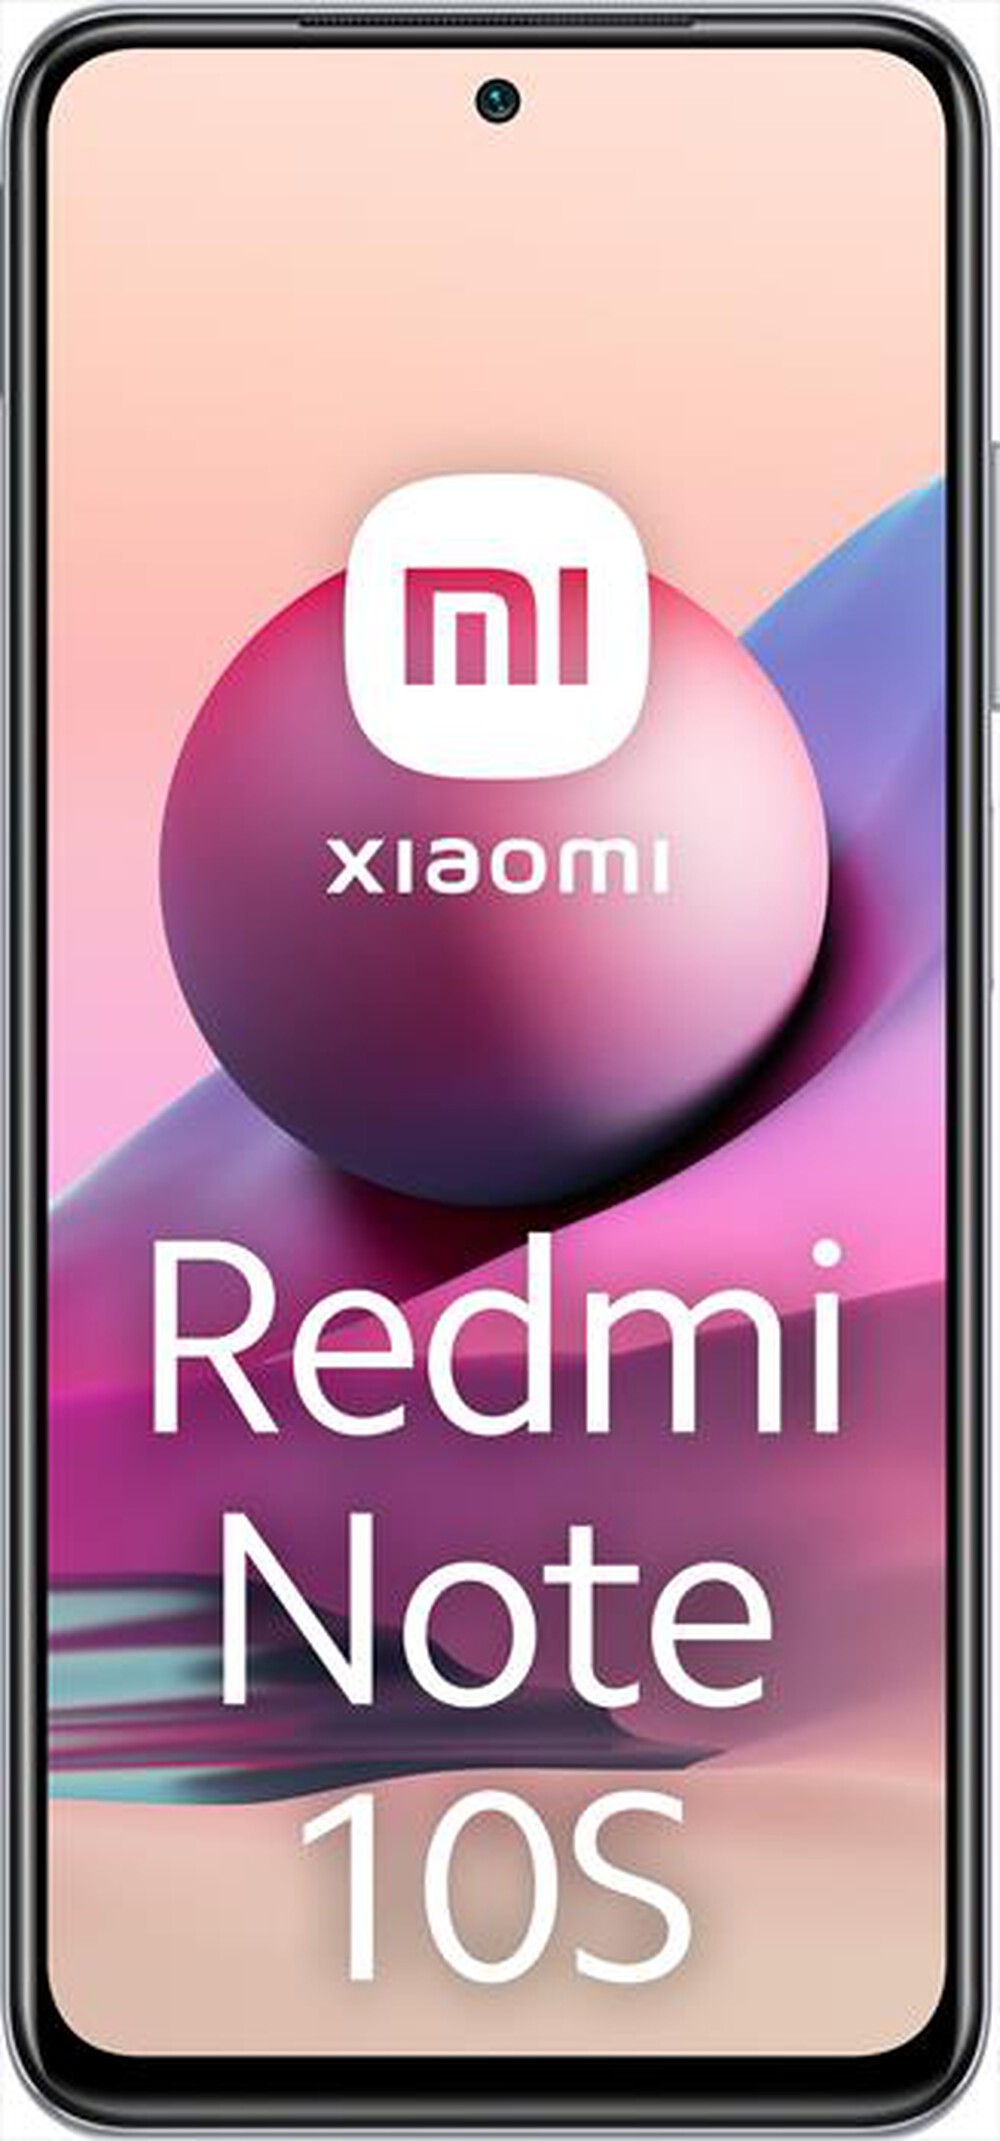 "XIAOMI - REDMI NOTE 10S 6+128GB - Pebble White"